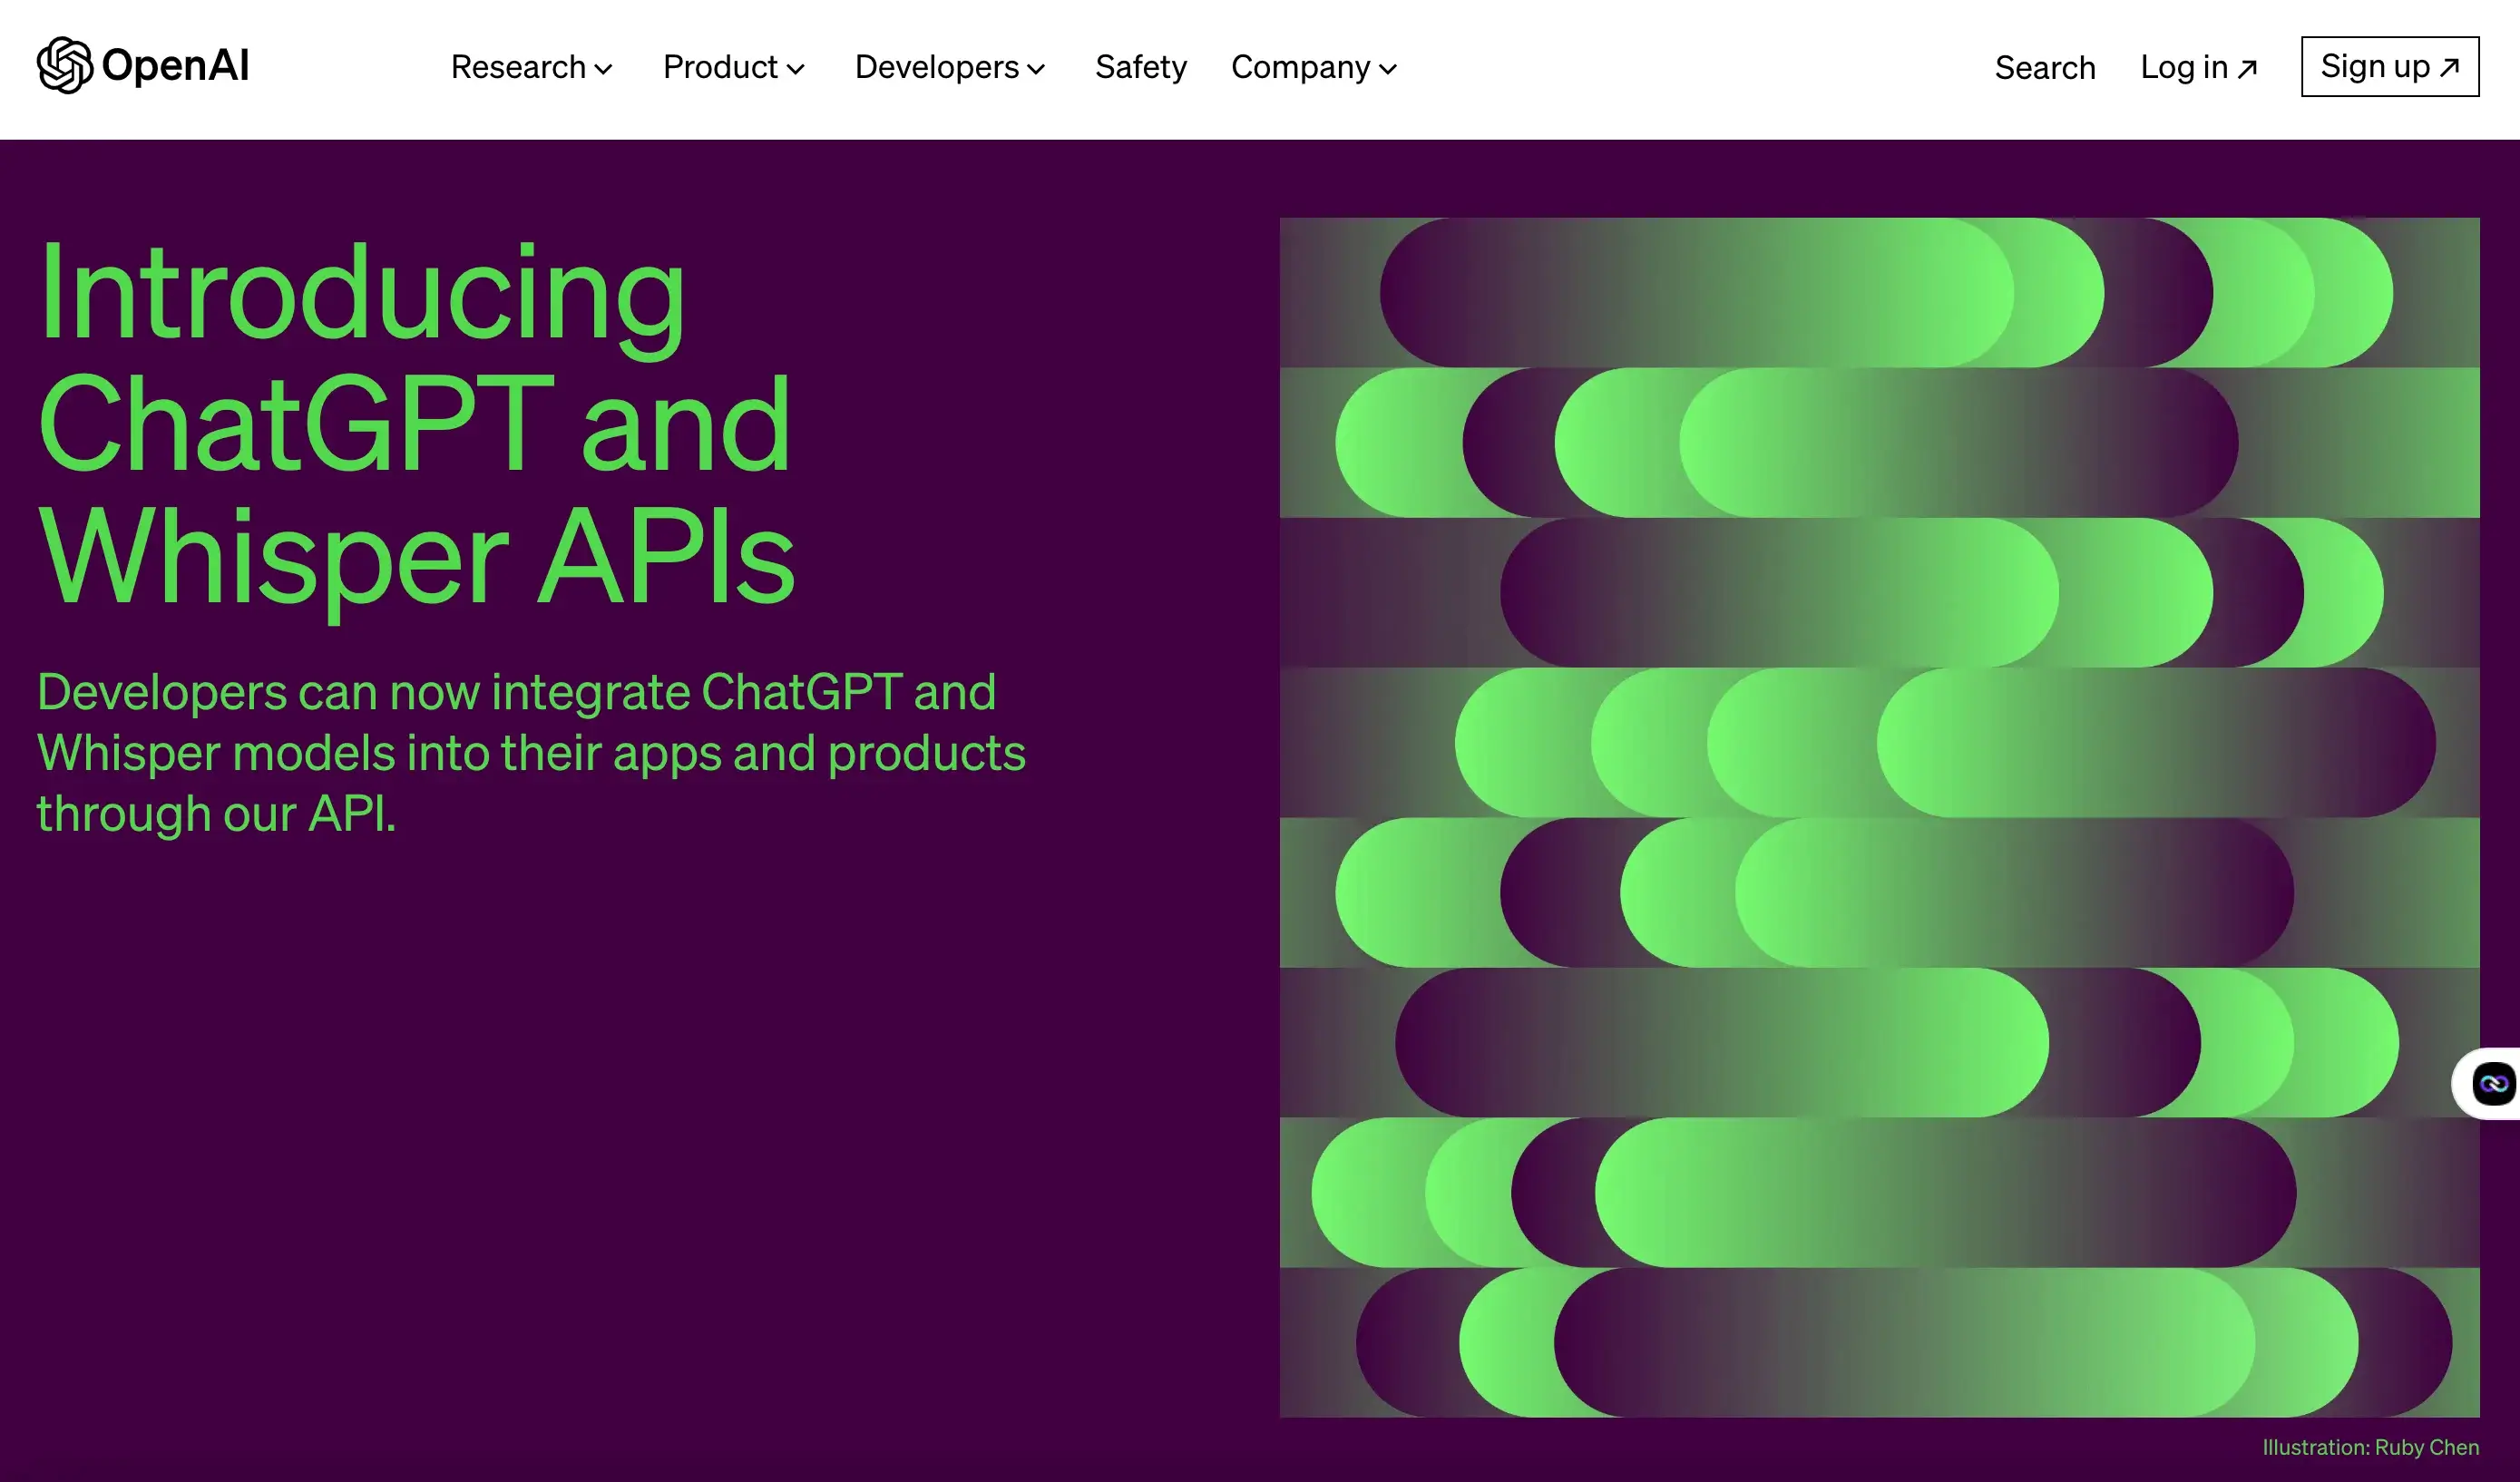 OpenAI stellt ChatGPT und Whisper APIs vor